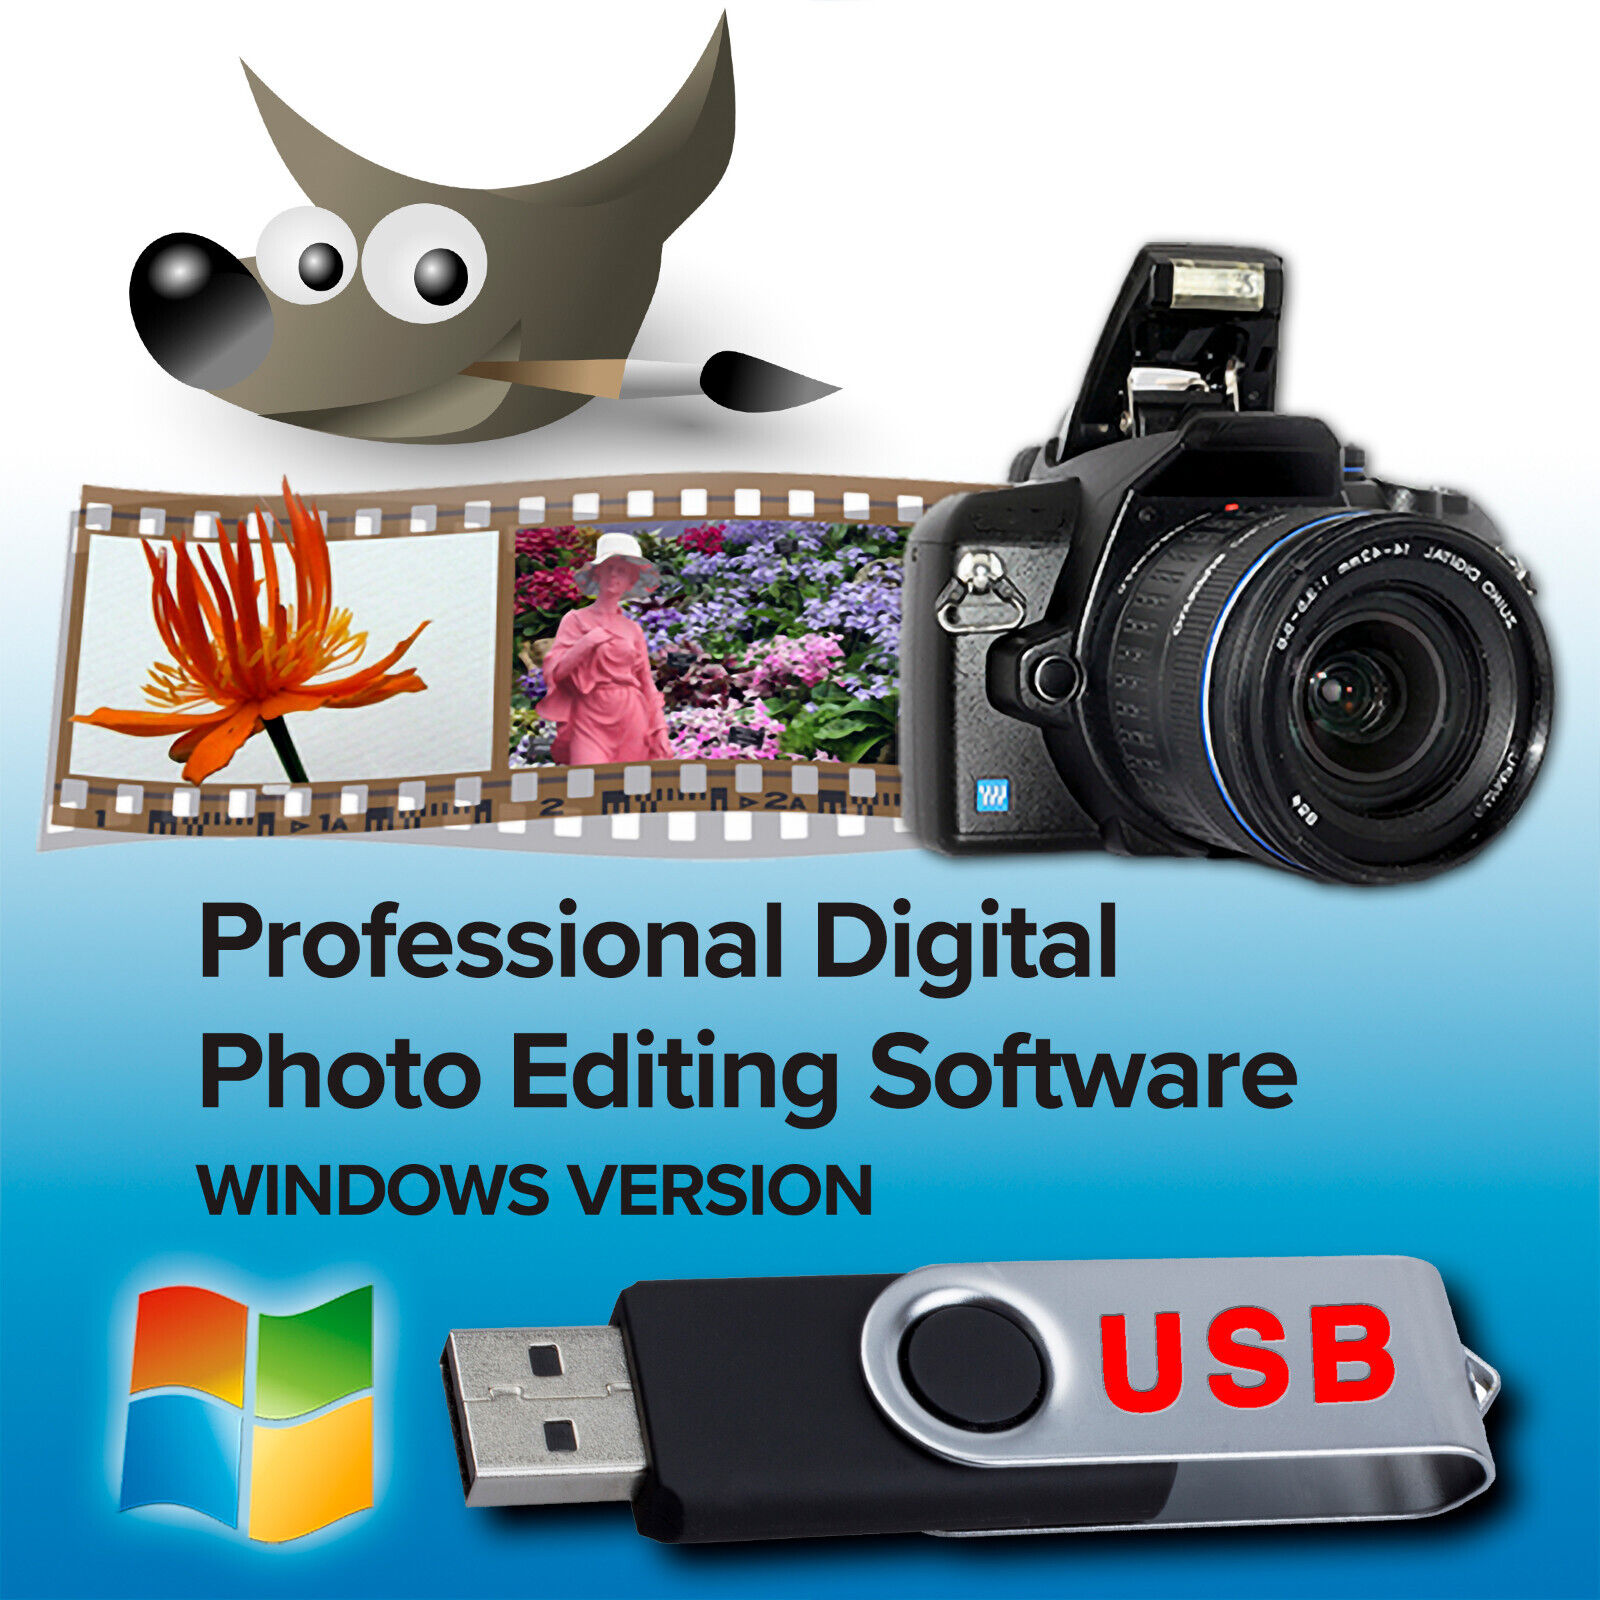 NEW PRO Photo Graphic Design Image Editing Software-GIMP-w Photo shop Guide-USB